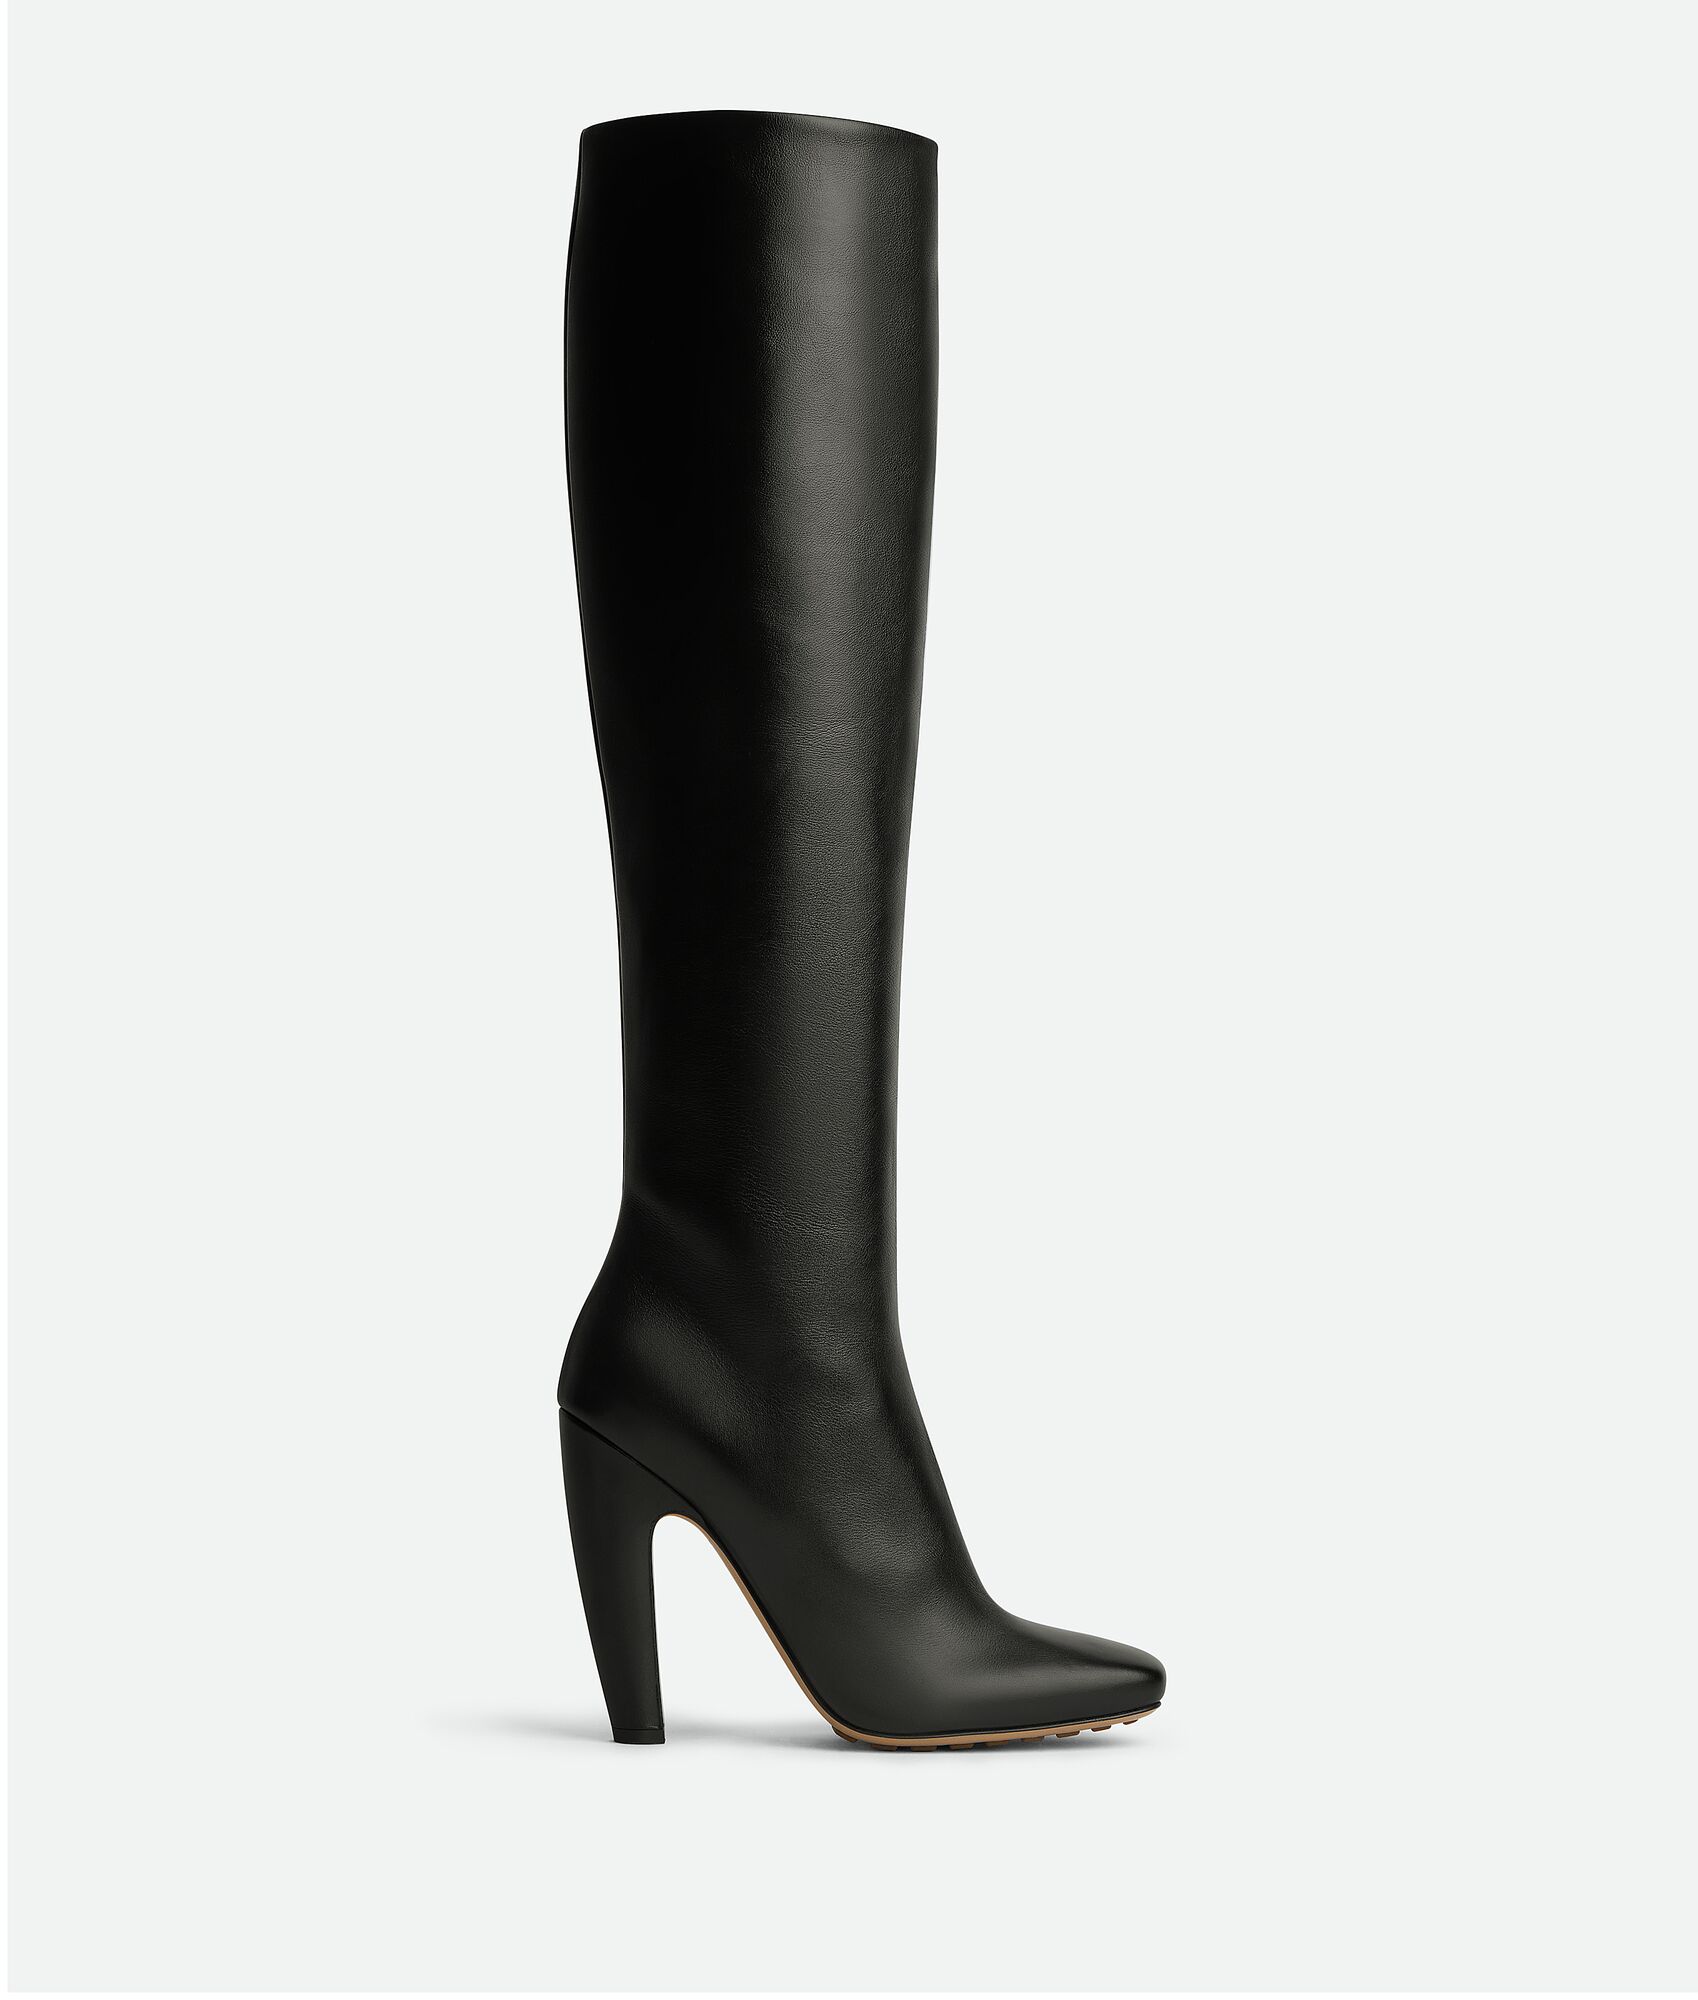 Bottega Veneta® Women's Lug Boot in Black. Shop online now.